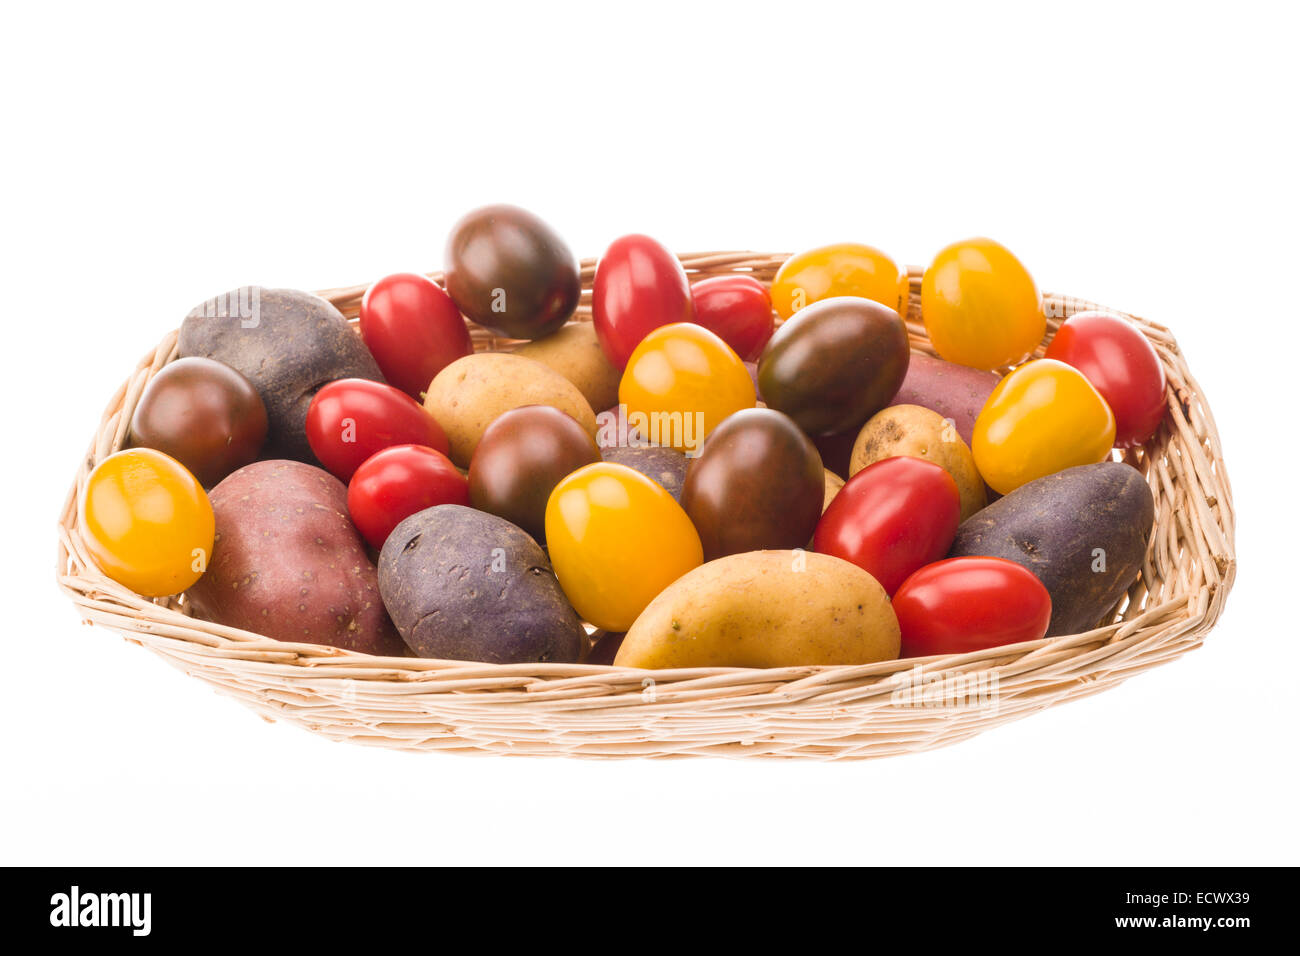 Different coloured potato and tomato varieties Stock Photo